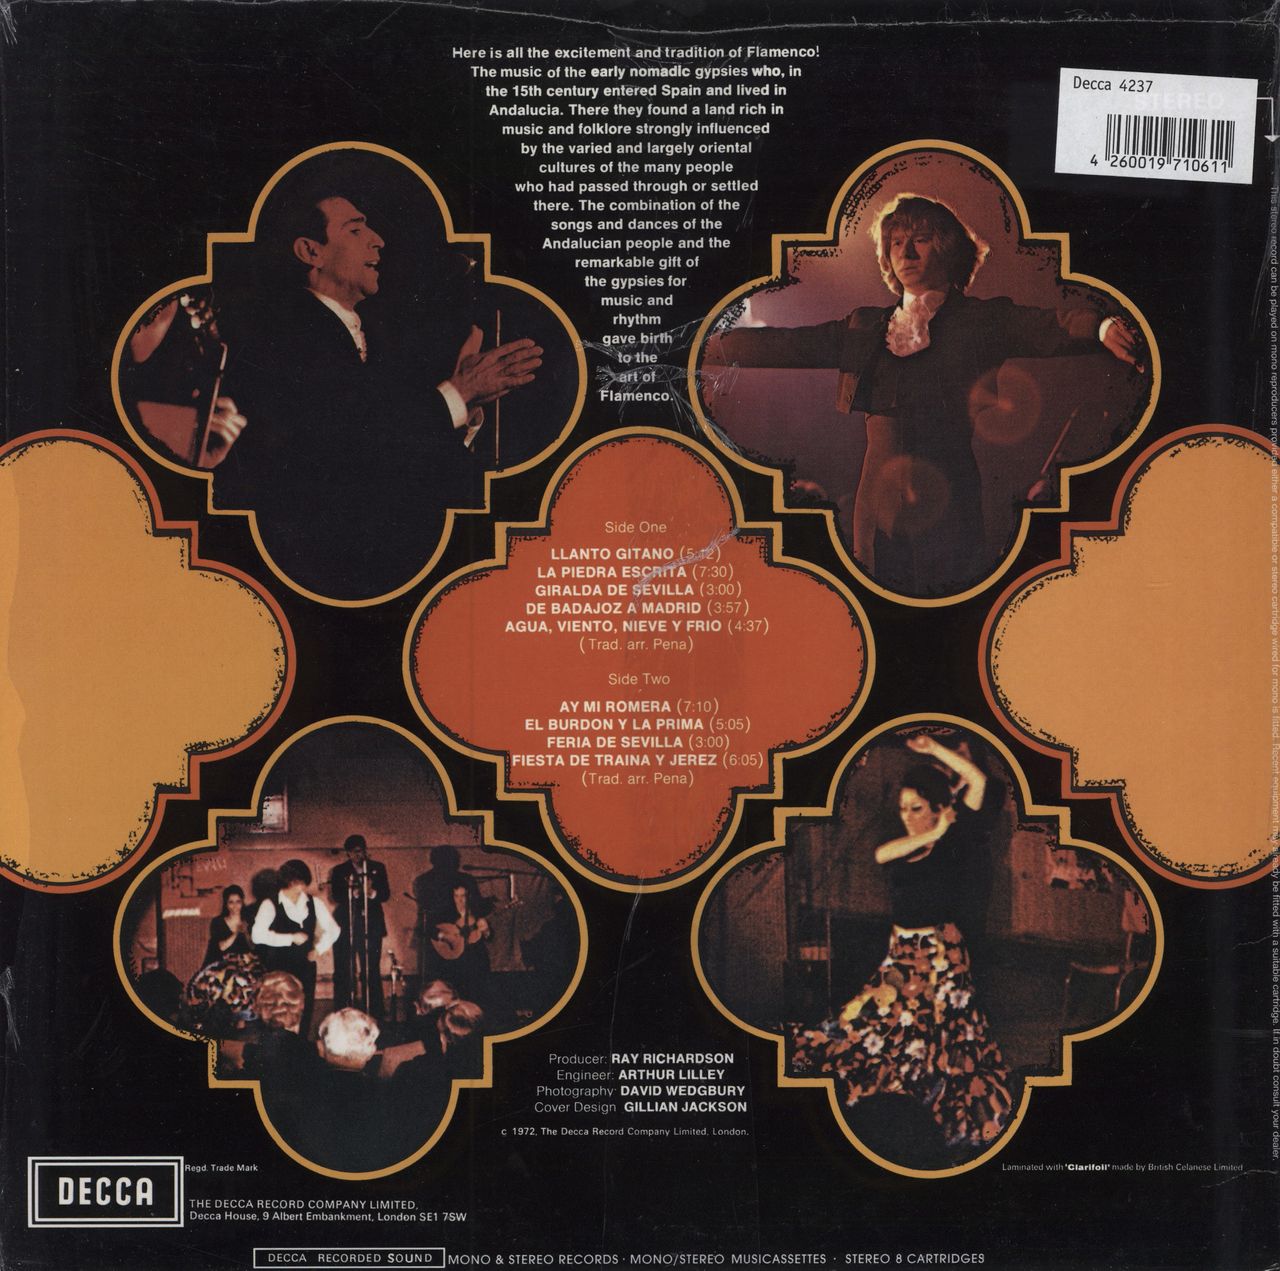 Paco Peña Flamenco Puro "Live" German vinyl LP album (LP record) 4260019710611